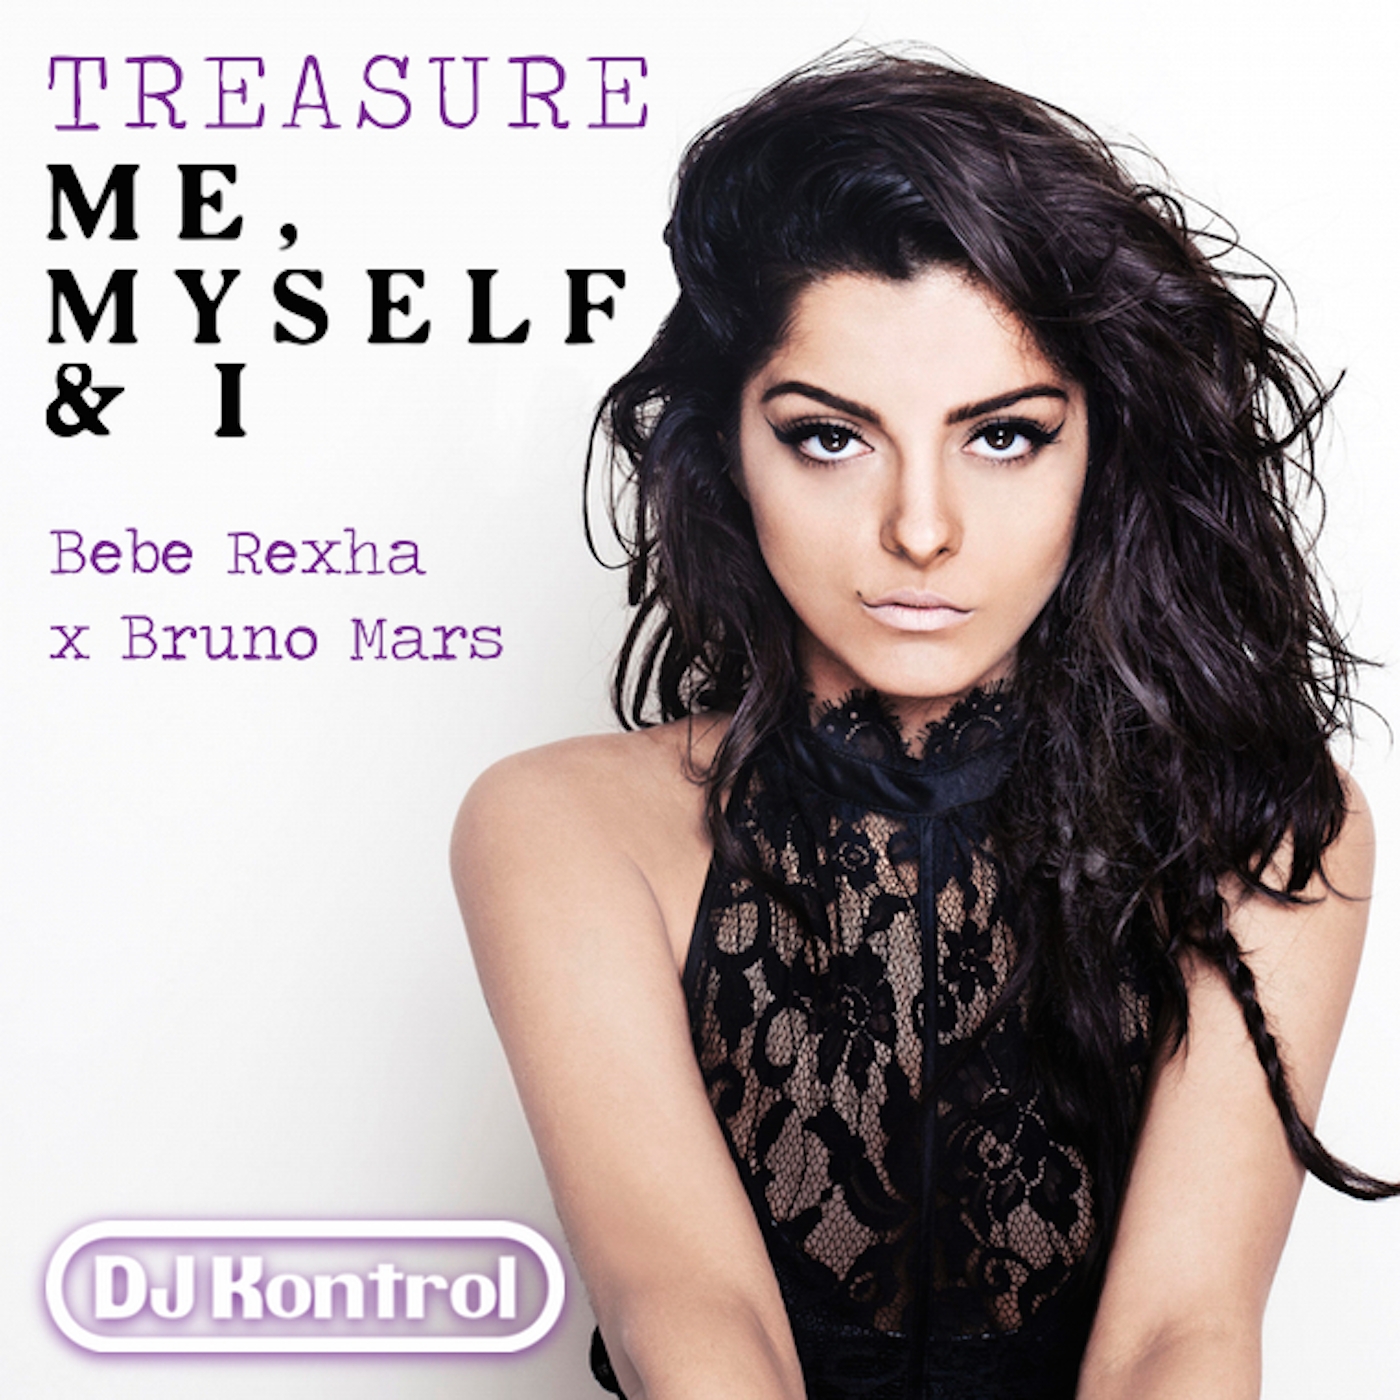 Bebe Rexha x Bruno Mars - Treasure Me, Myself & I (DJ Kontrol Mash)